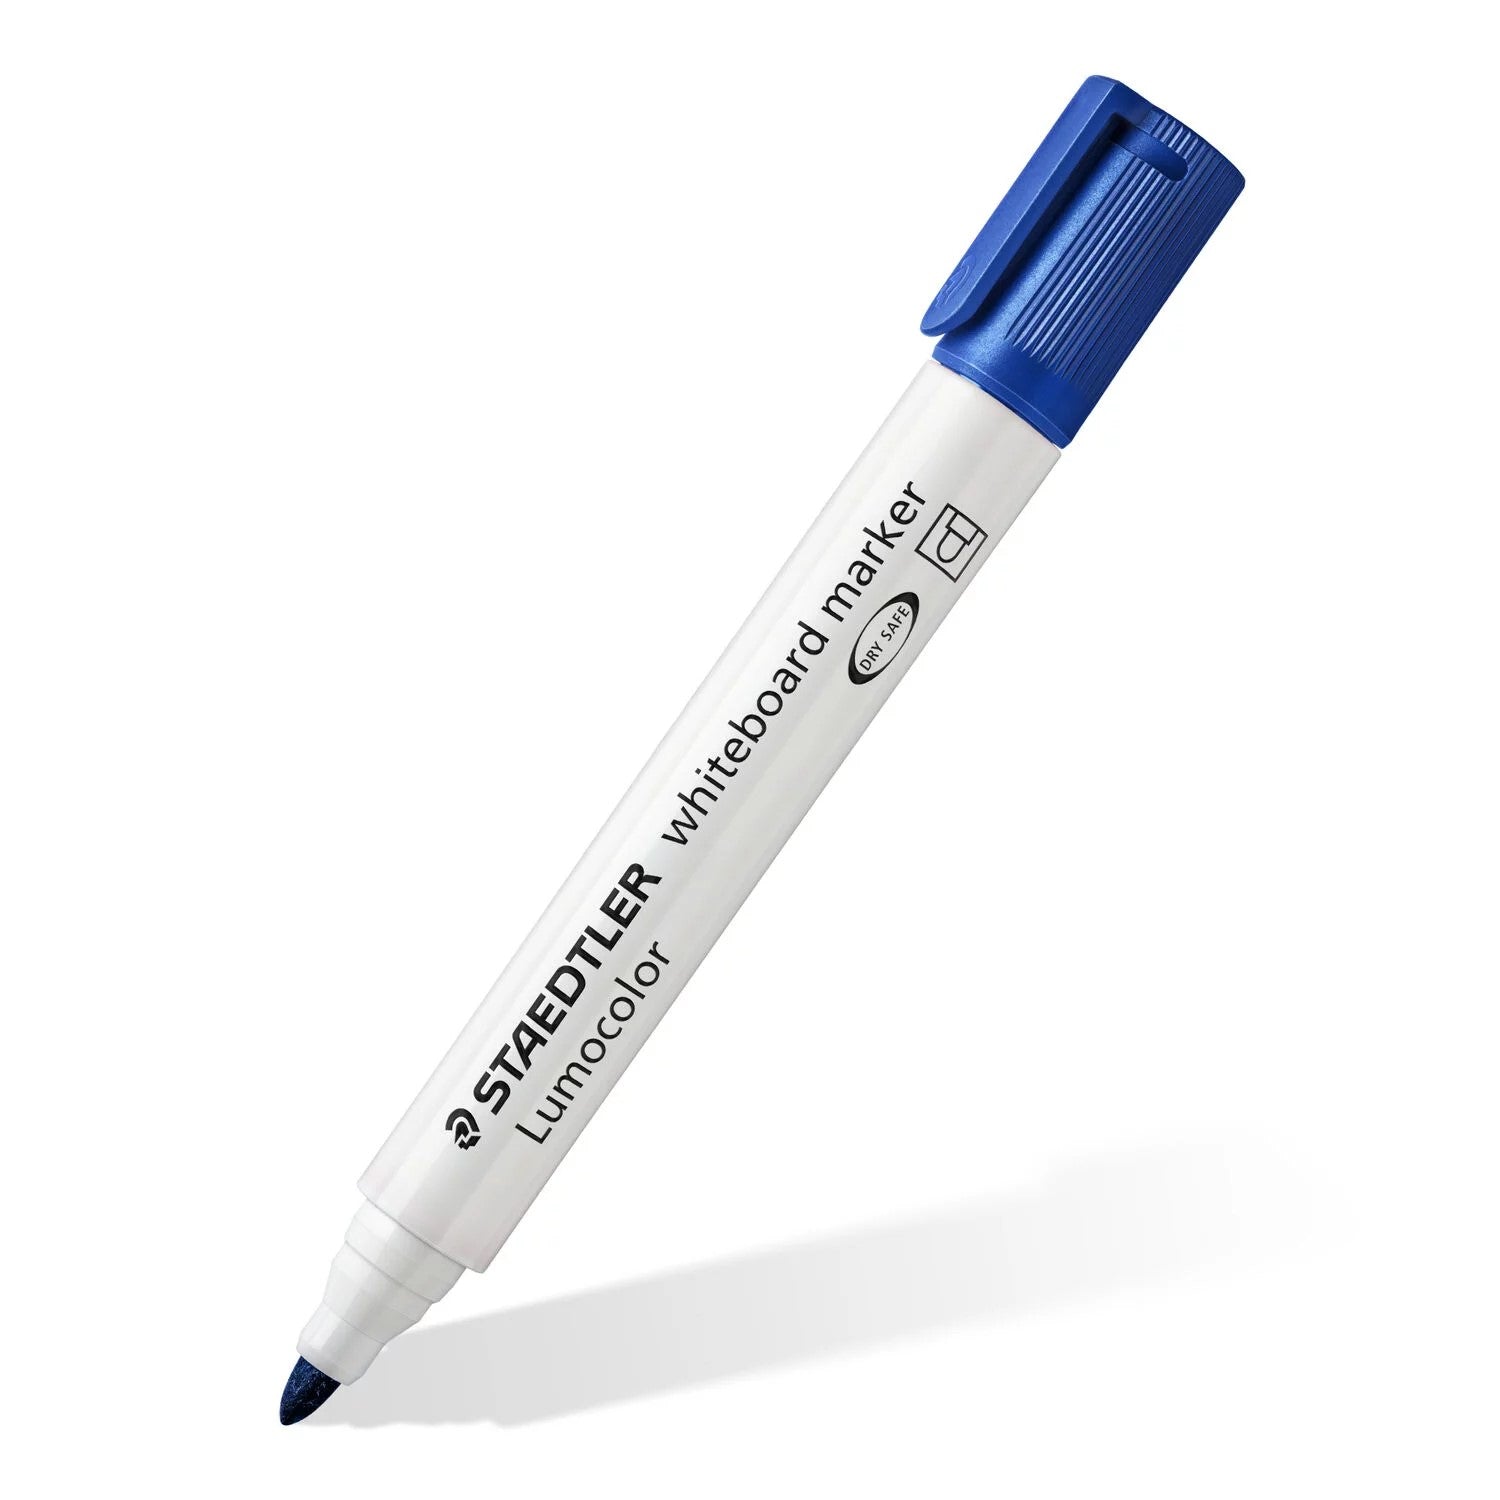 Lumocolor® whiteboard marker351 marcatore per lavagne blu